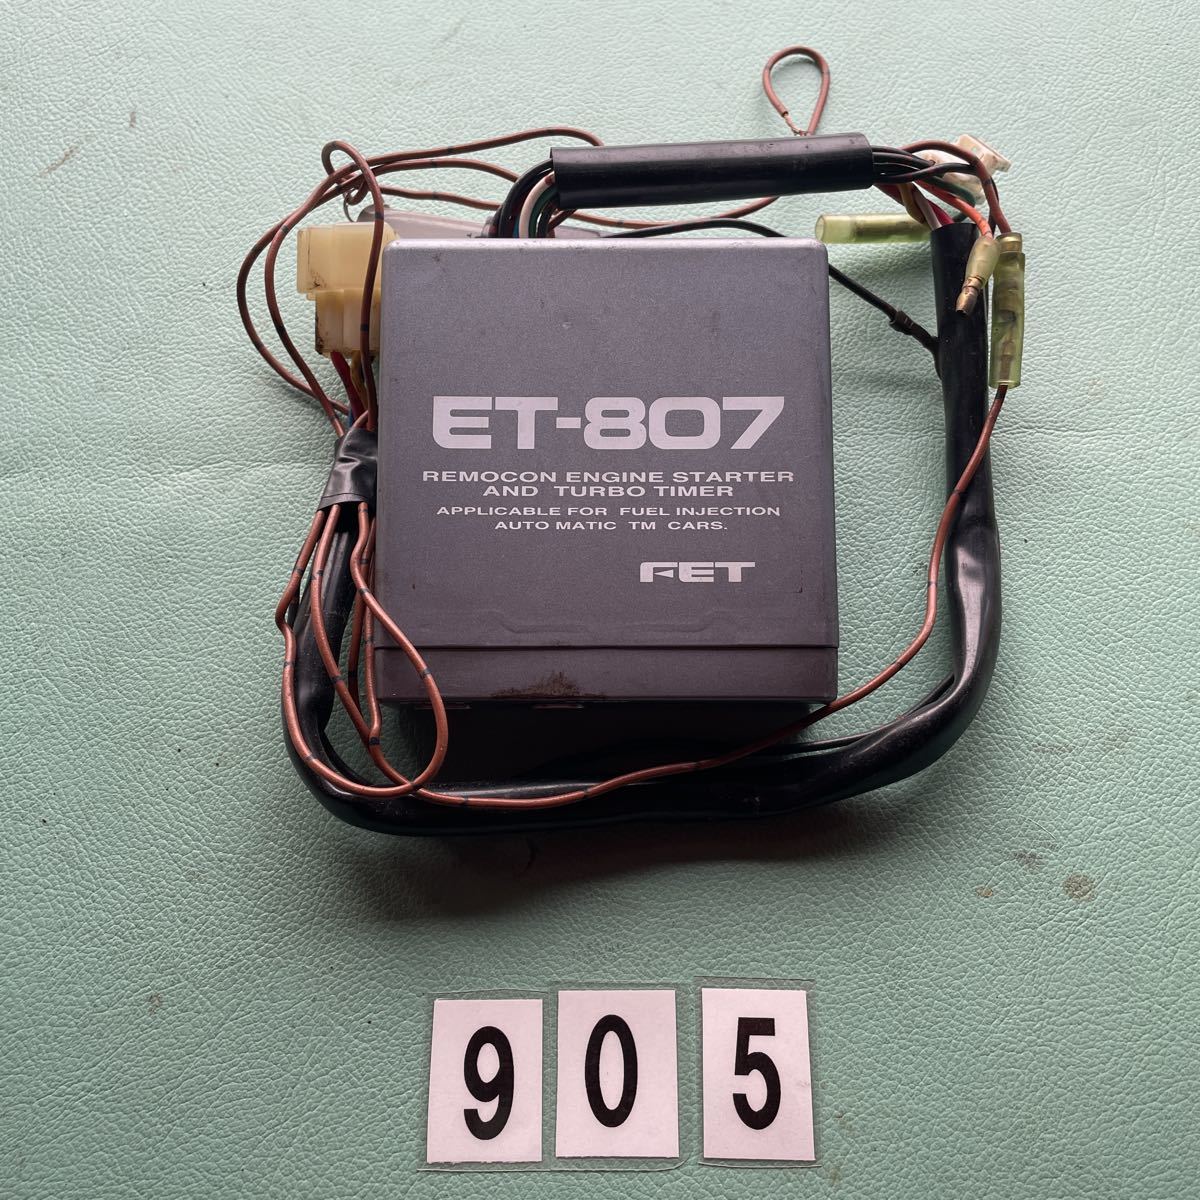 FET turbo timer engine starter ET-807 DC bar taNO.905